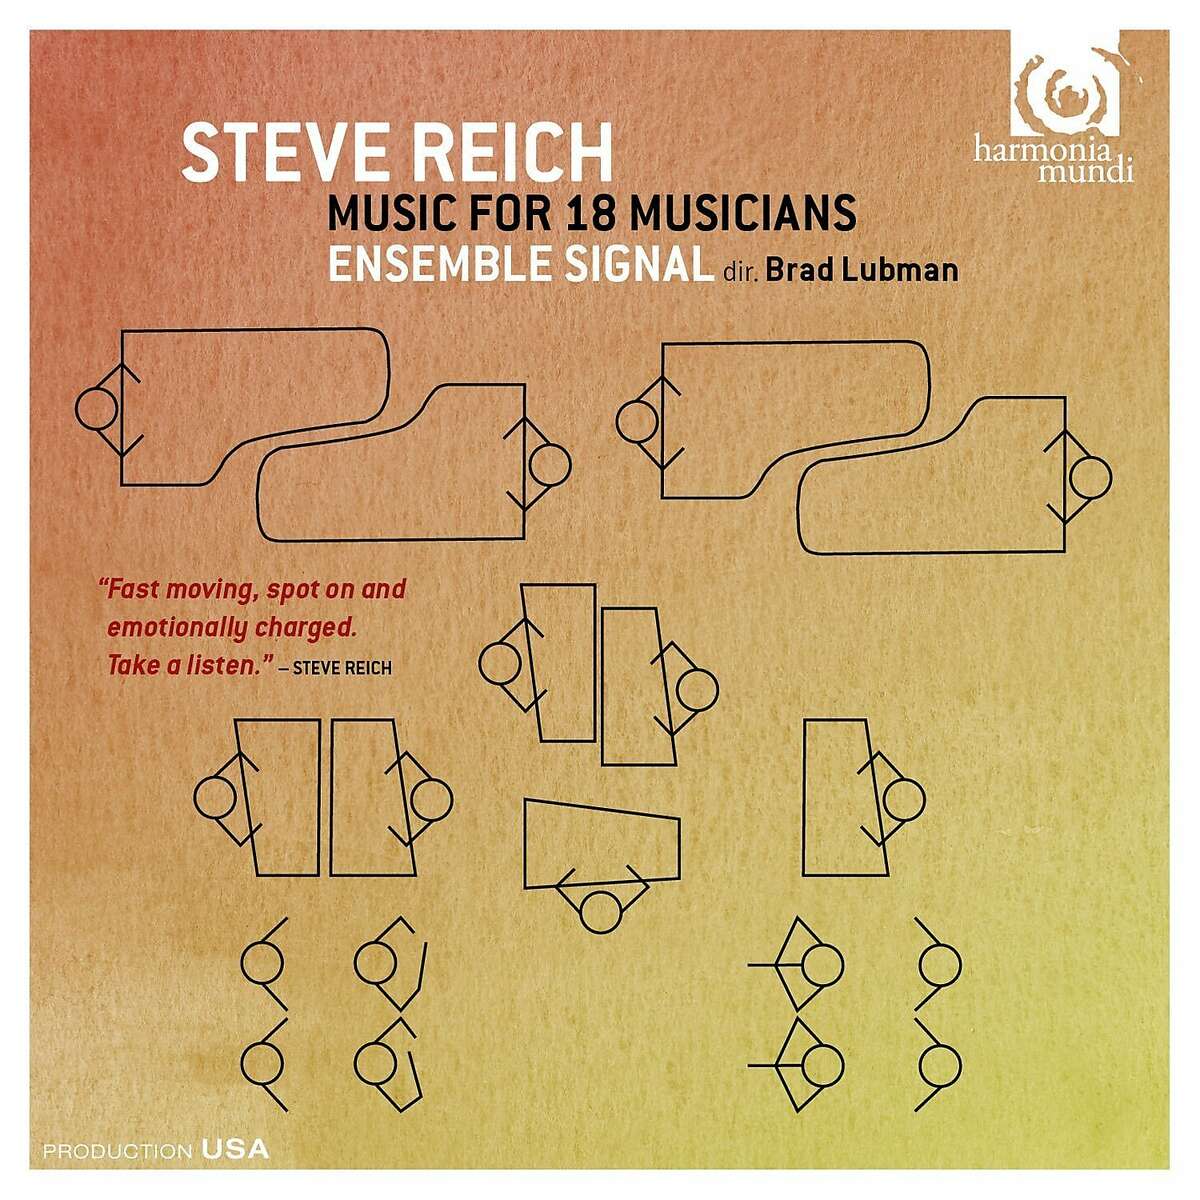 CD cover: Steve Reich, 'Music for 18 Musicians'